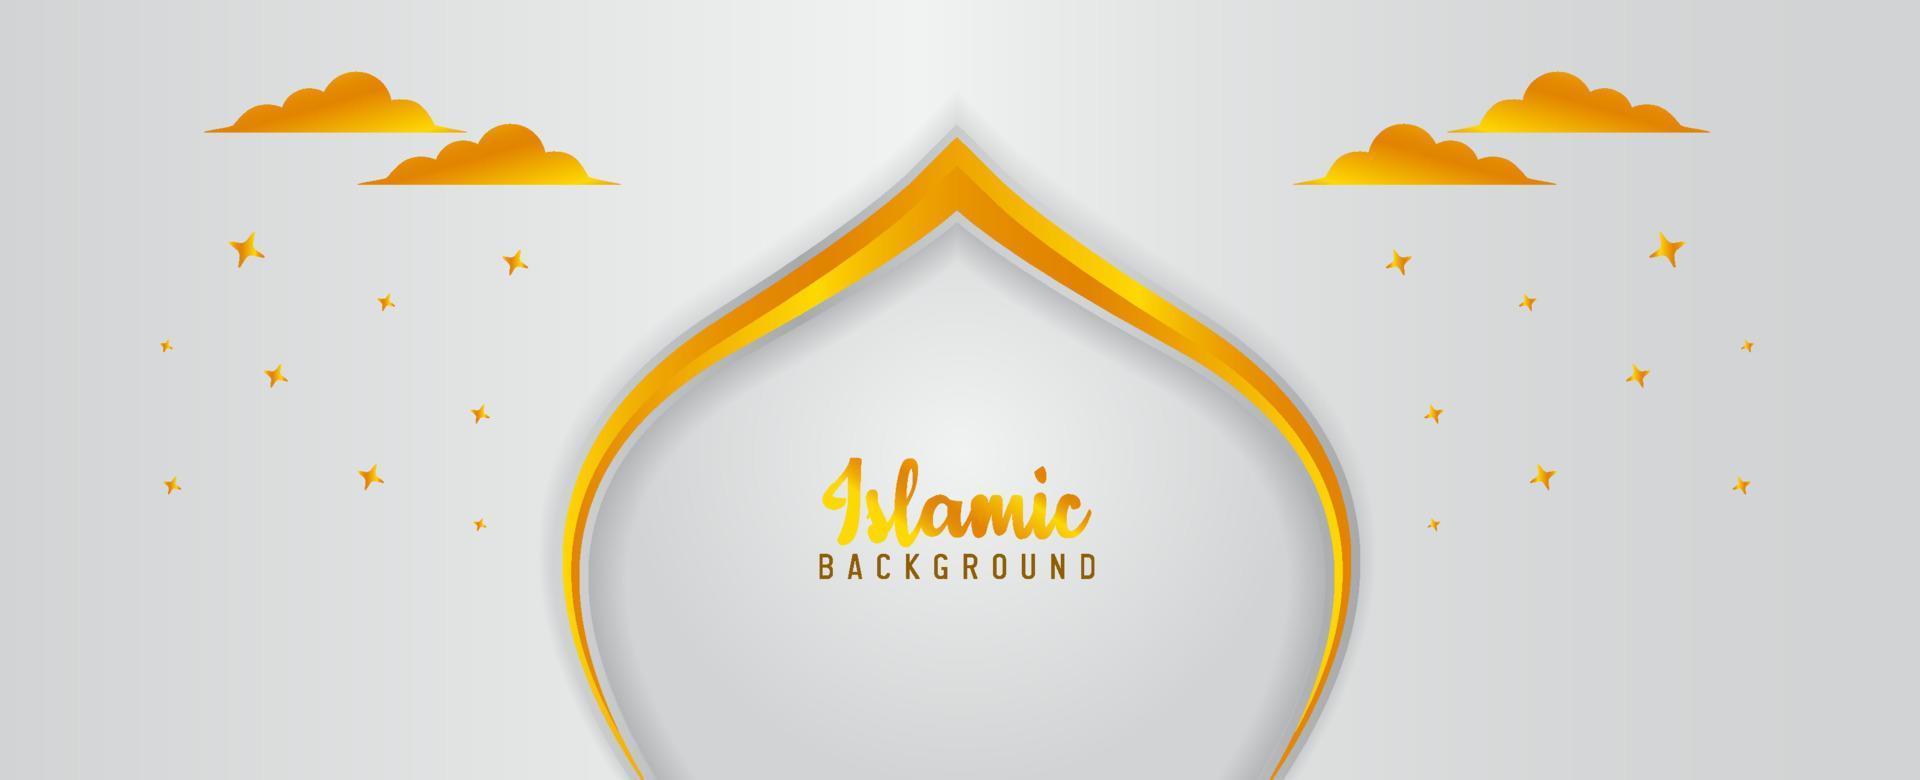 Islamic horizontal white and gold background Premium Vector